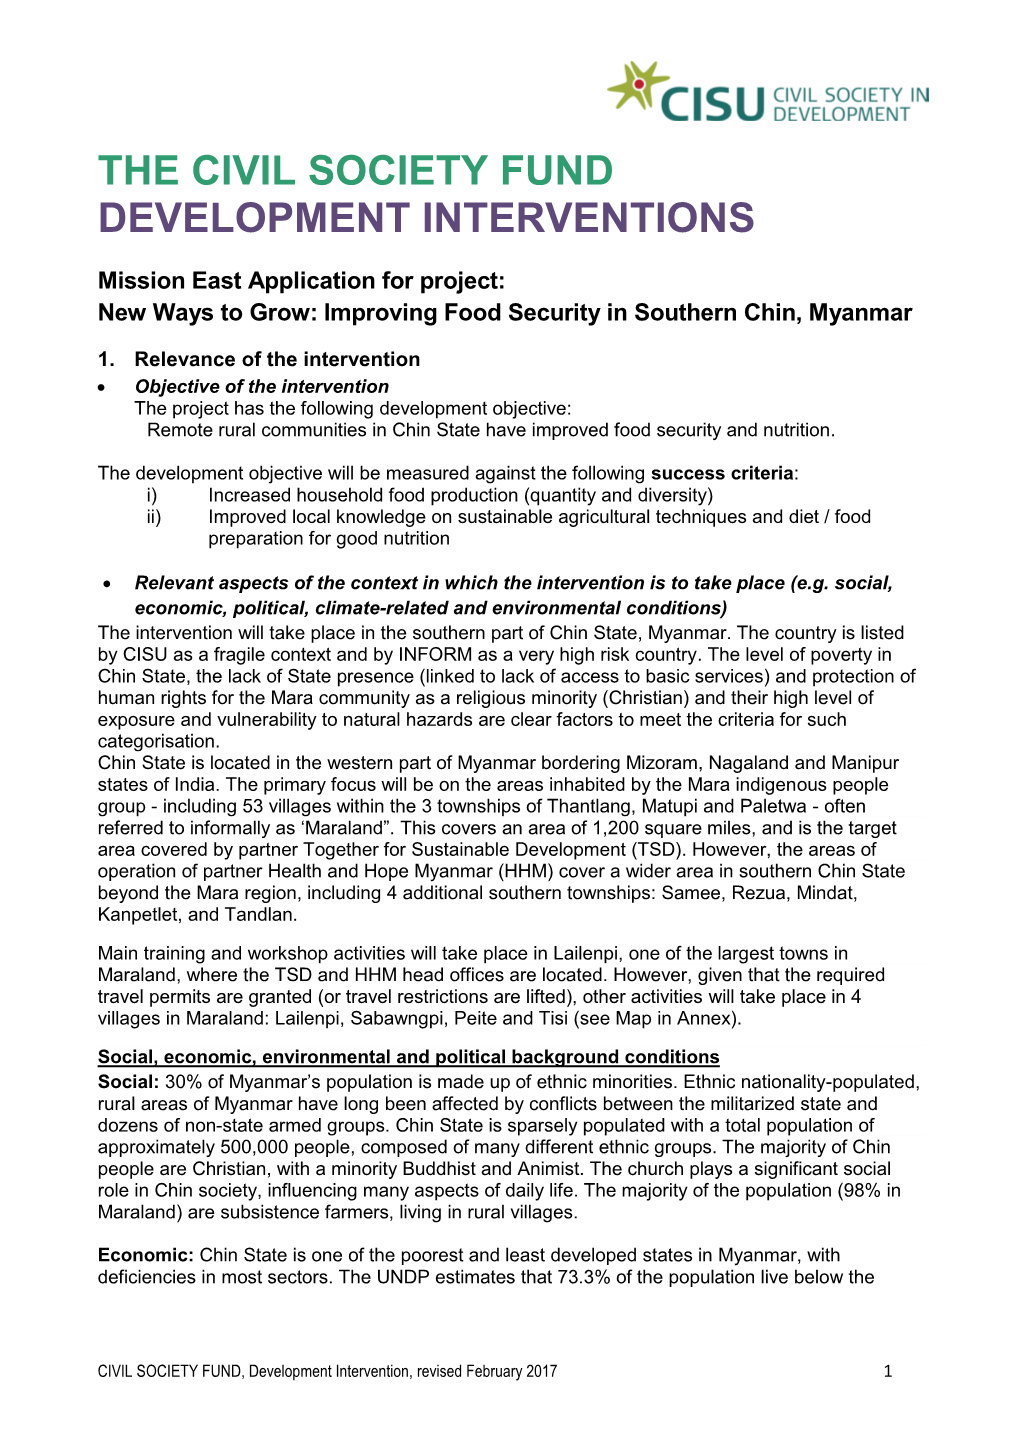 The Civil Society Fund Development Interventions